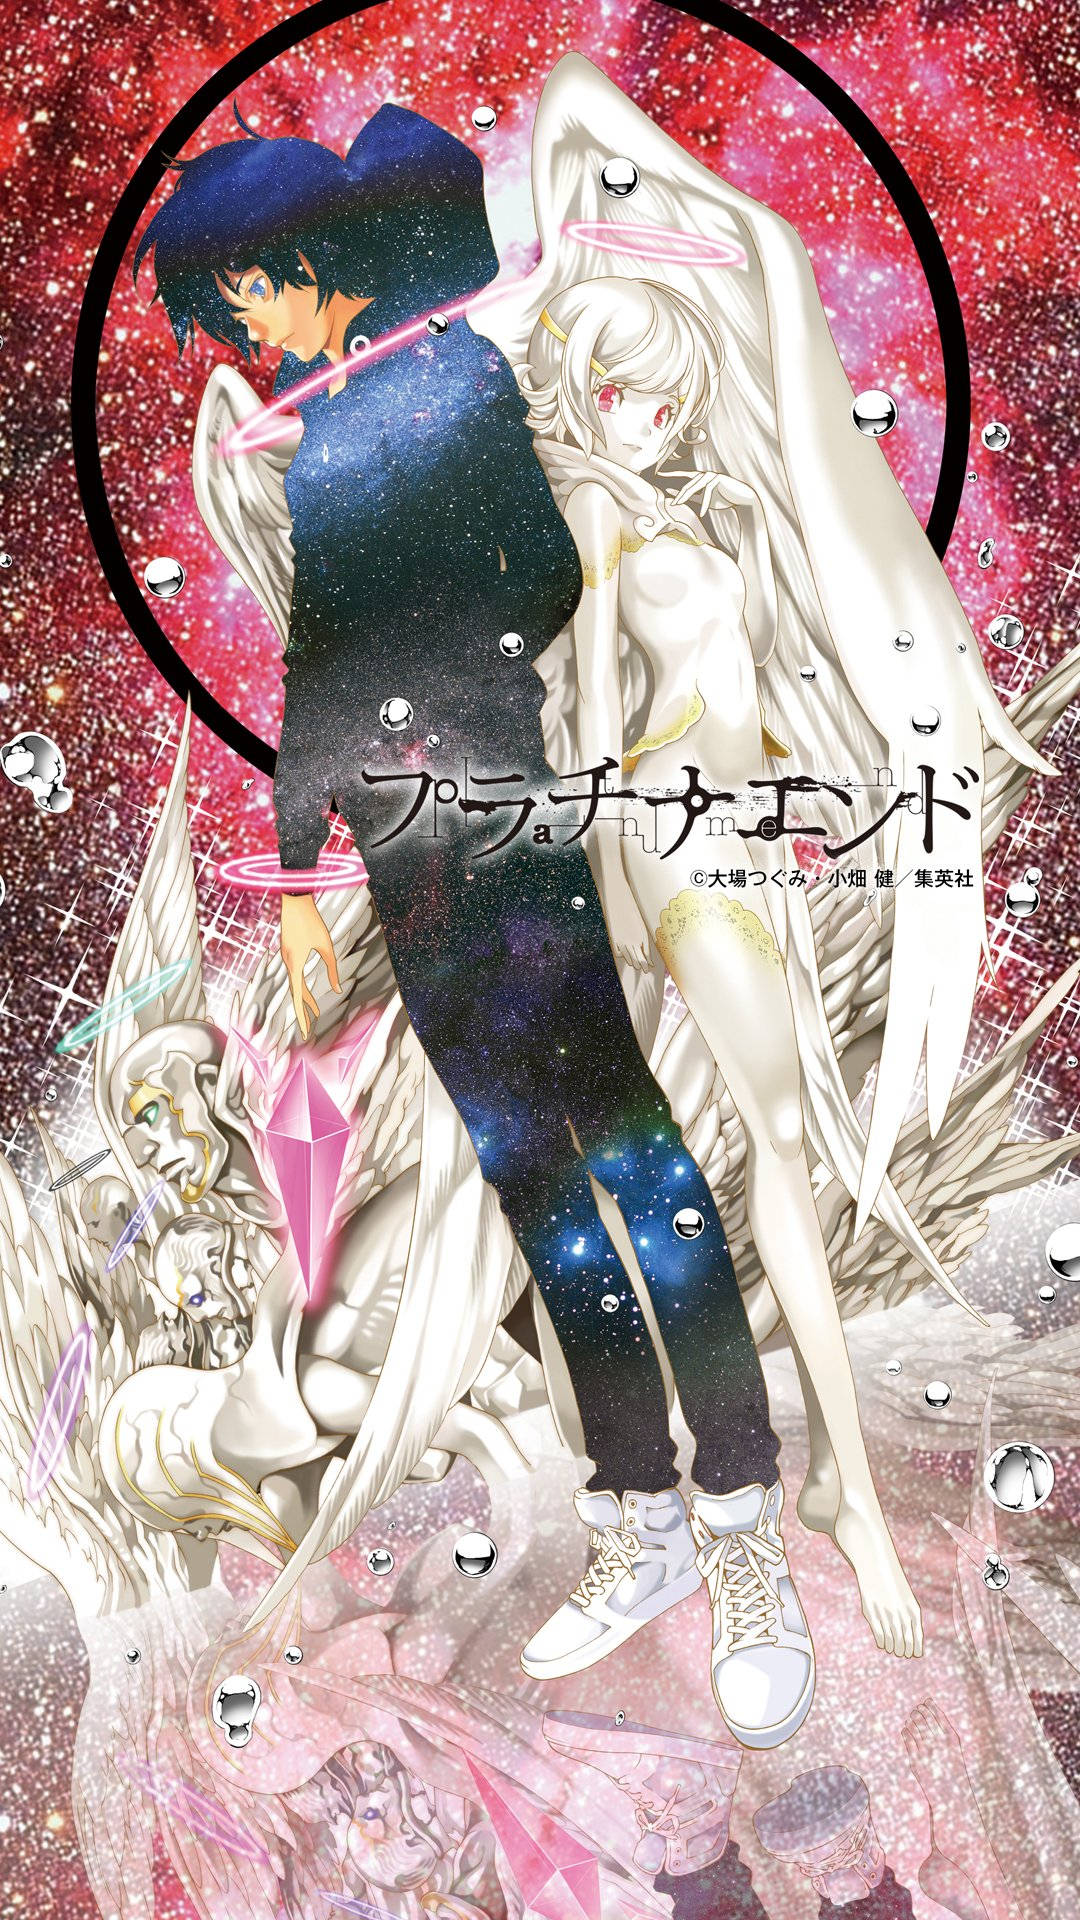 Platinum End Anime Manga Series Background